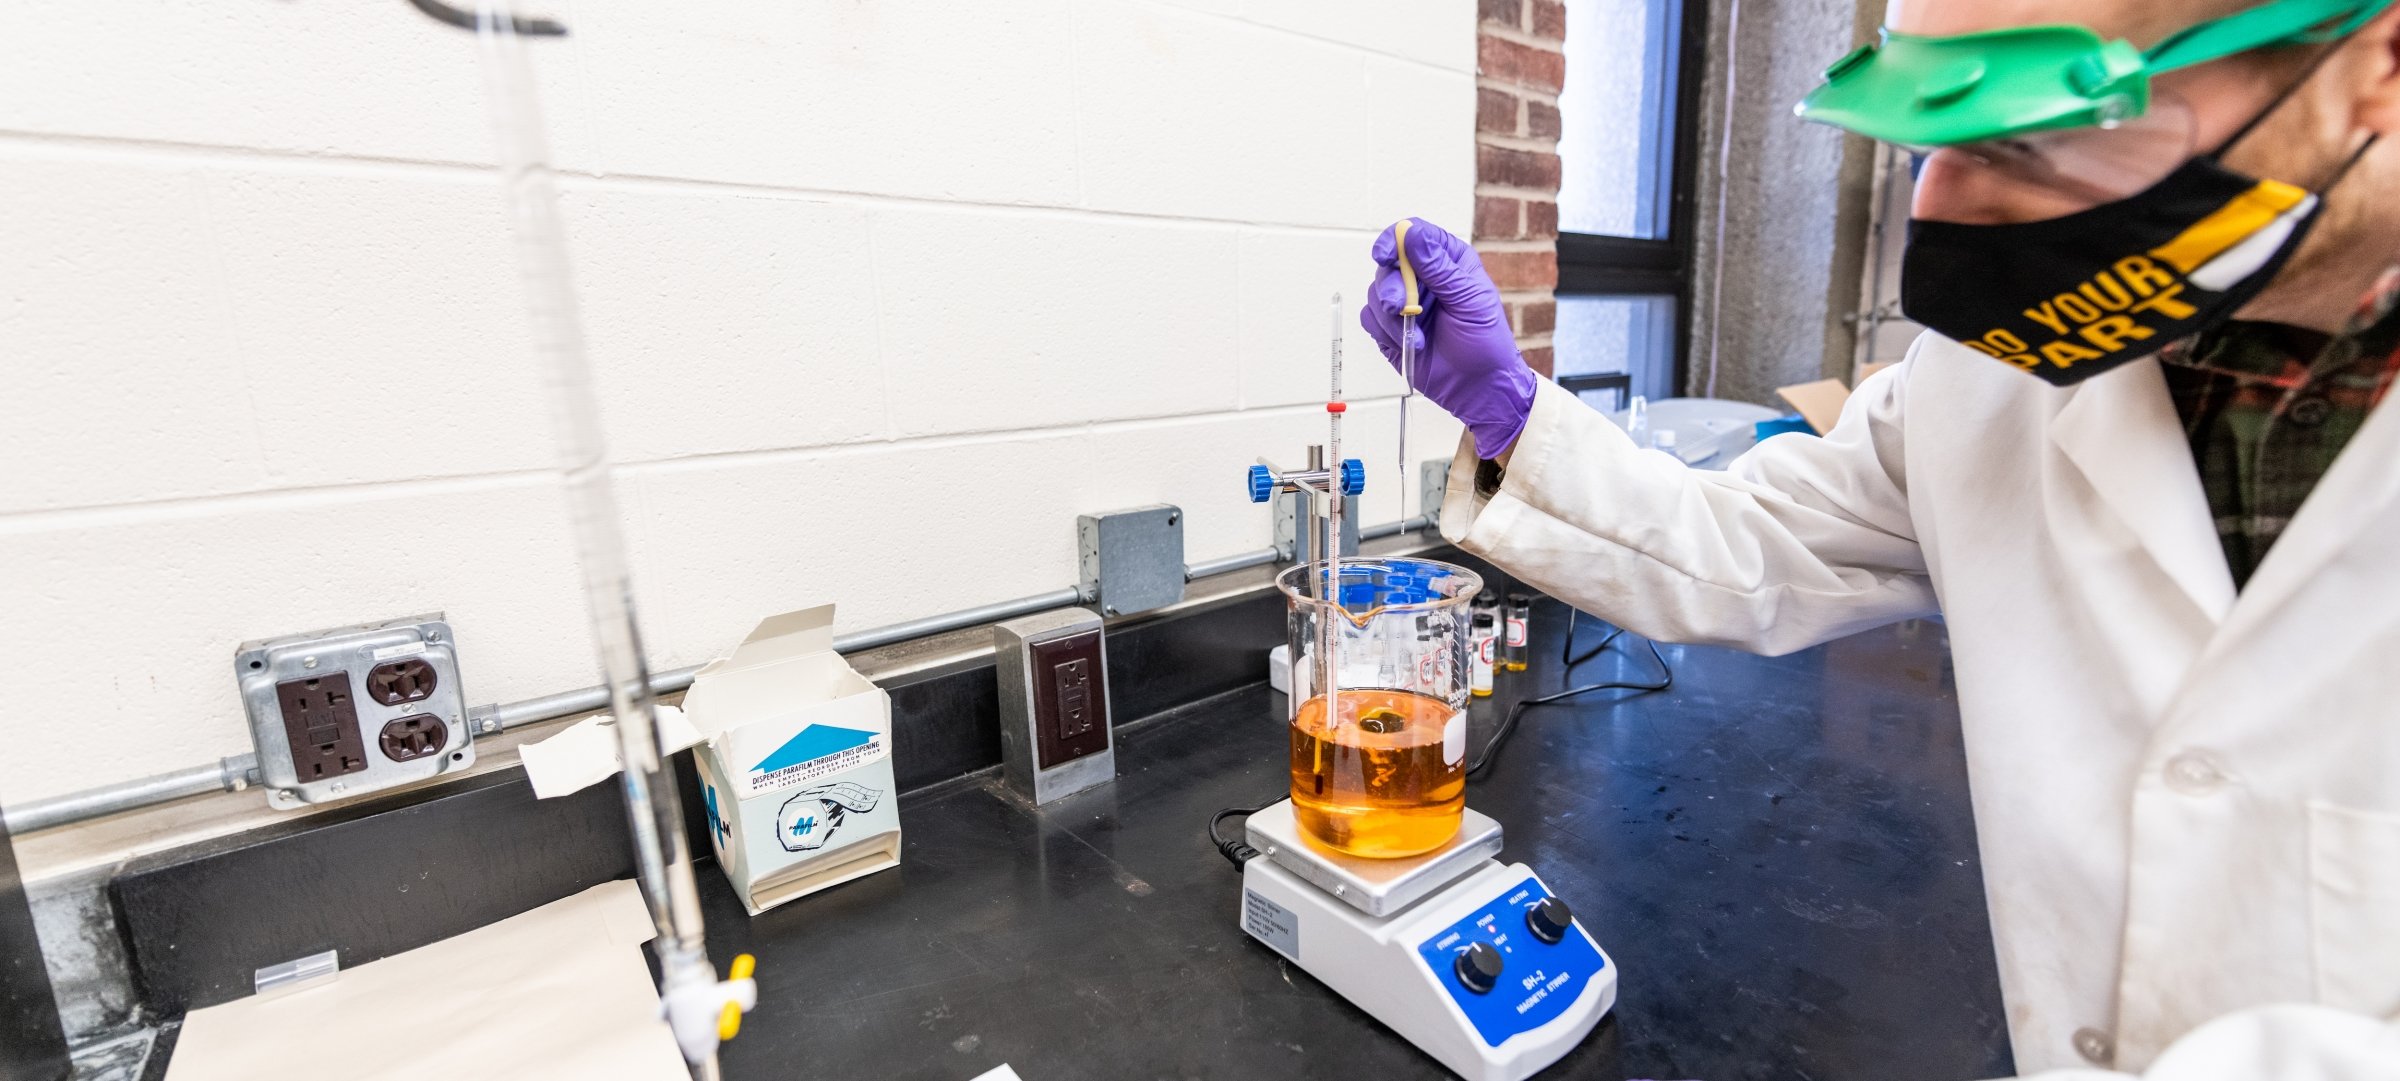 Researcher testing a liquid in a beaker on a scale inside a lab